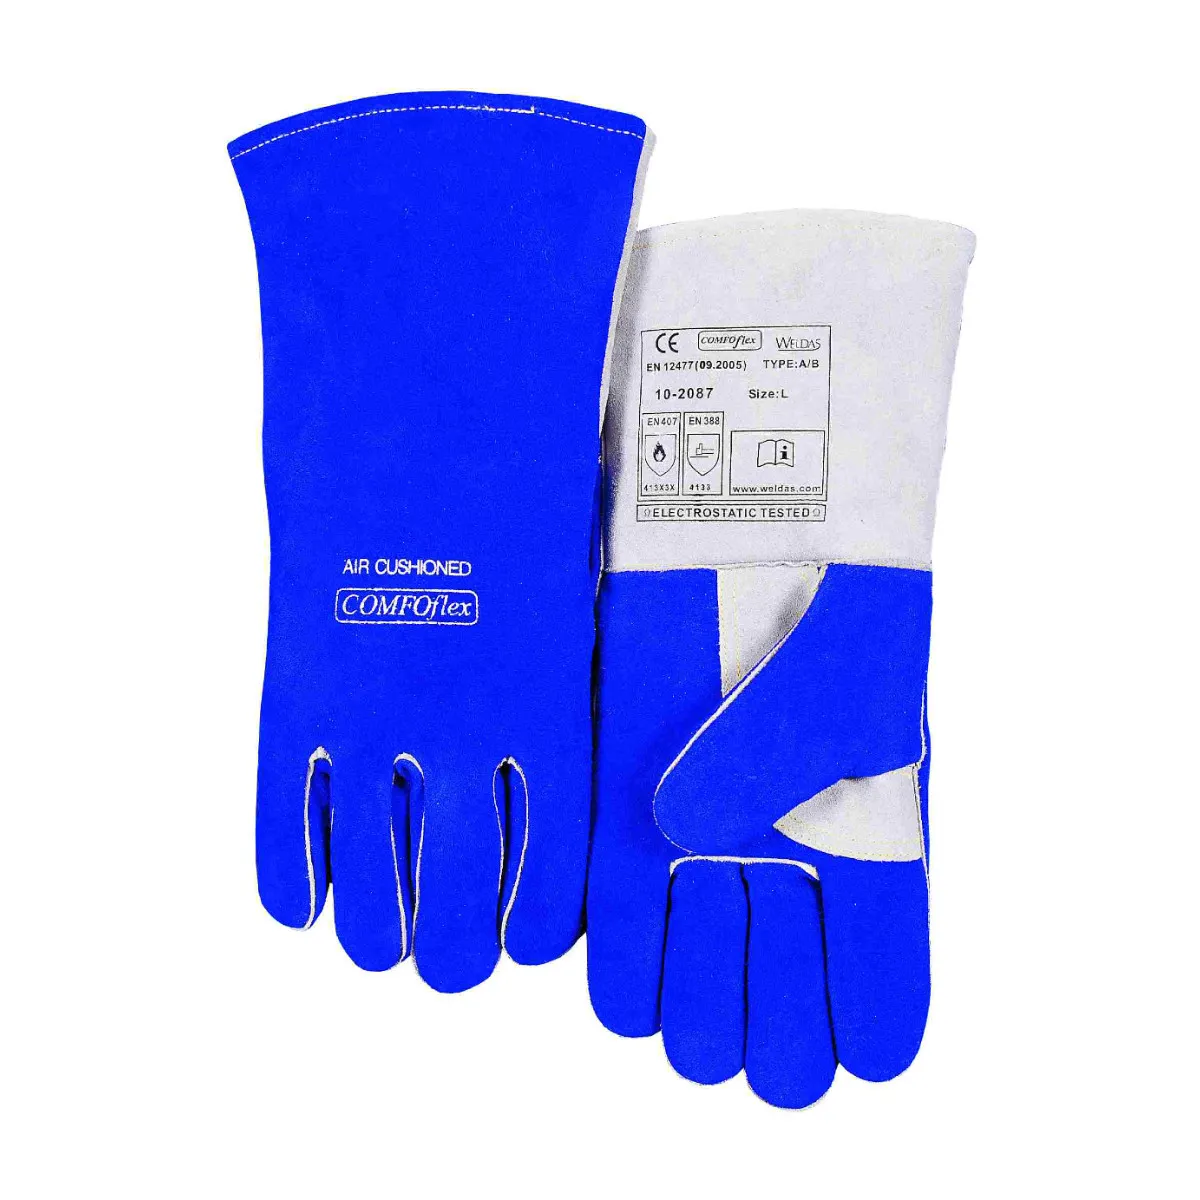 Zaštitne rukavice COMFOFLEX 10-2087 belo-plave - Weldas - PAR 